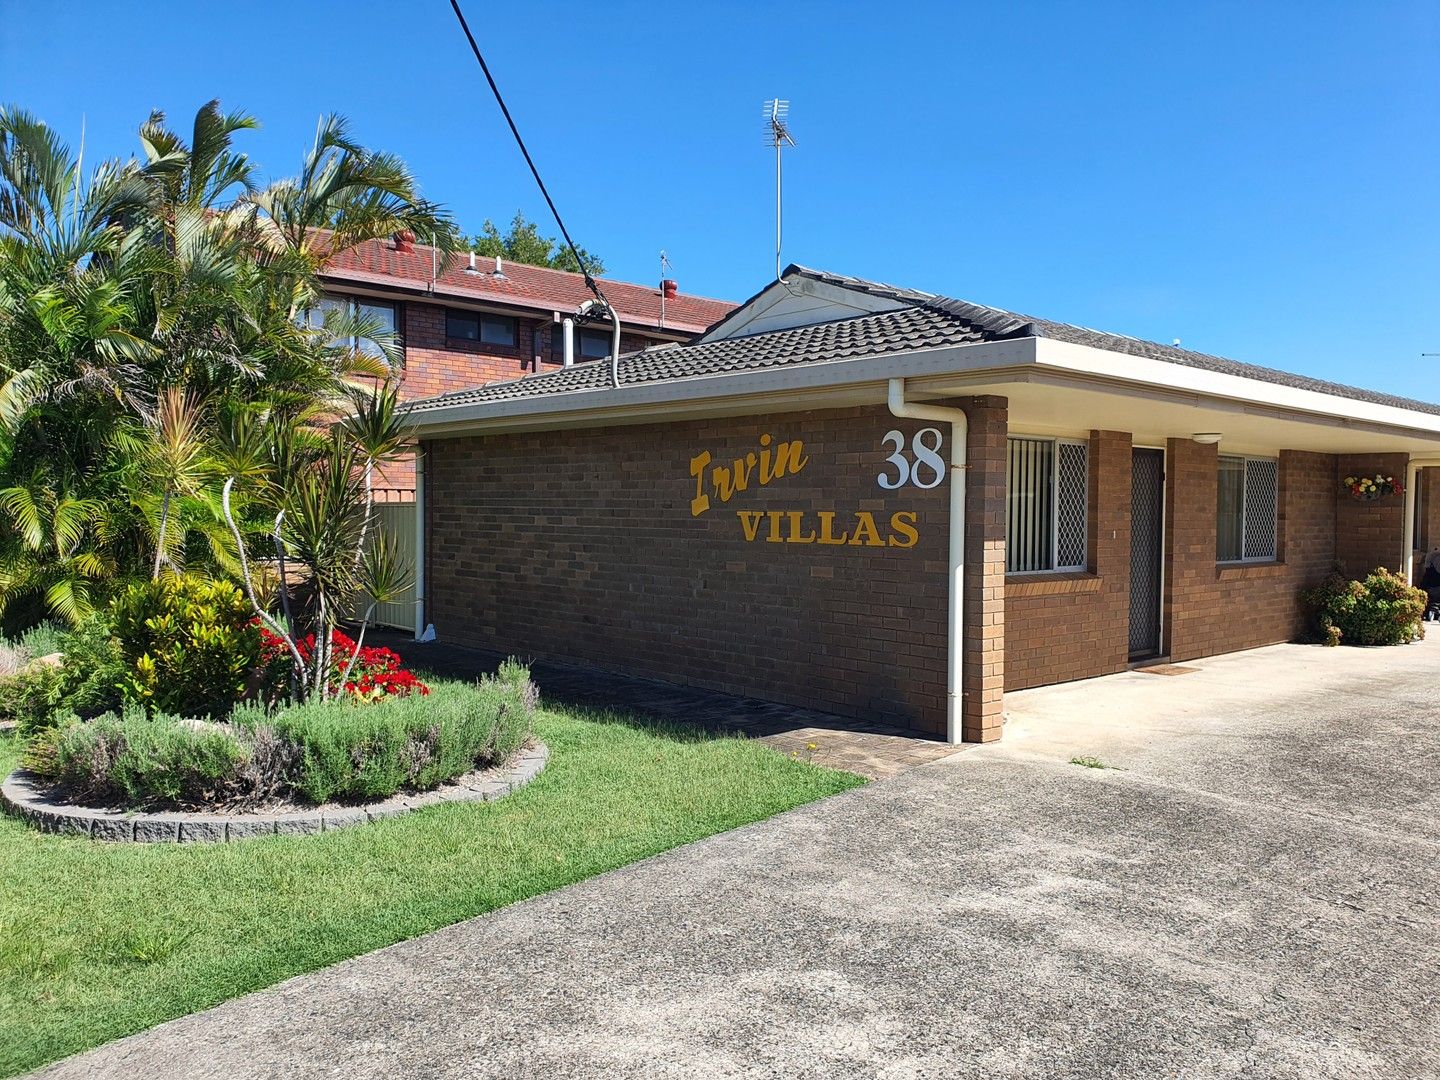 2 bedrooms Villa in 1/38 Boultwood St COFFS HARBOUR NSW, 2450